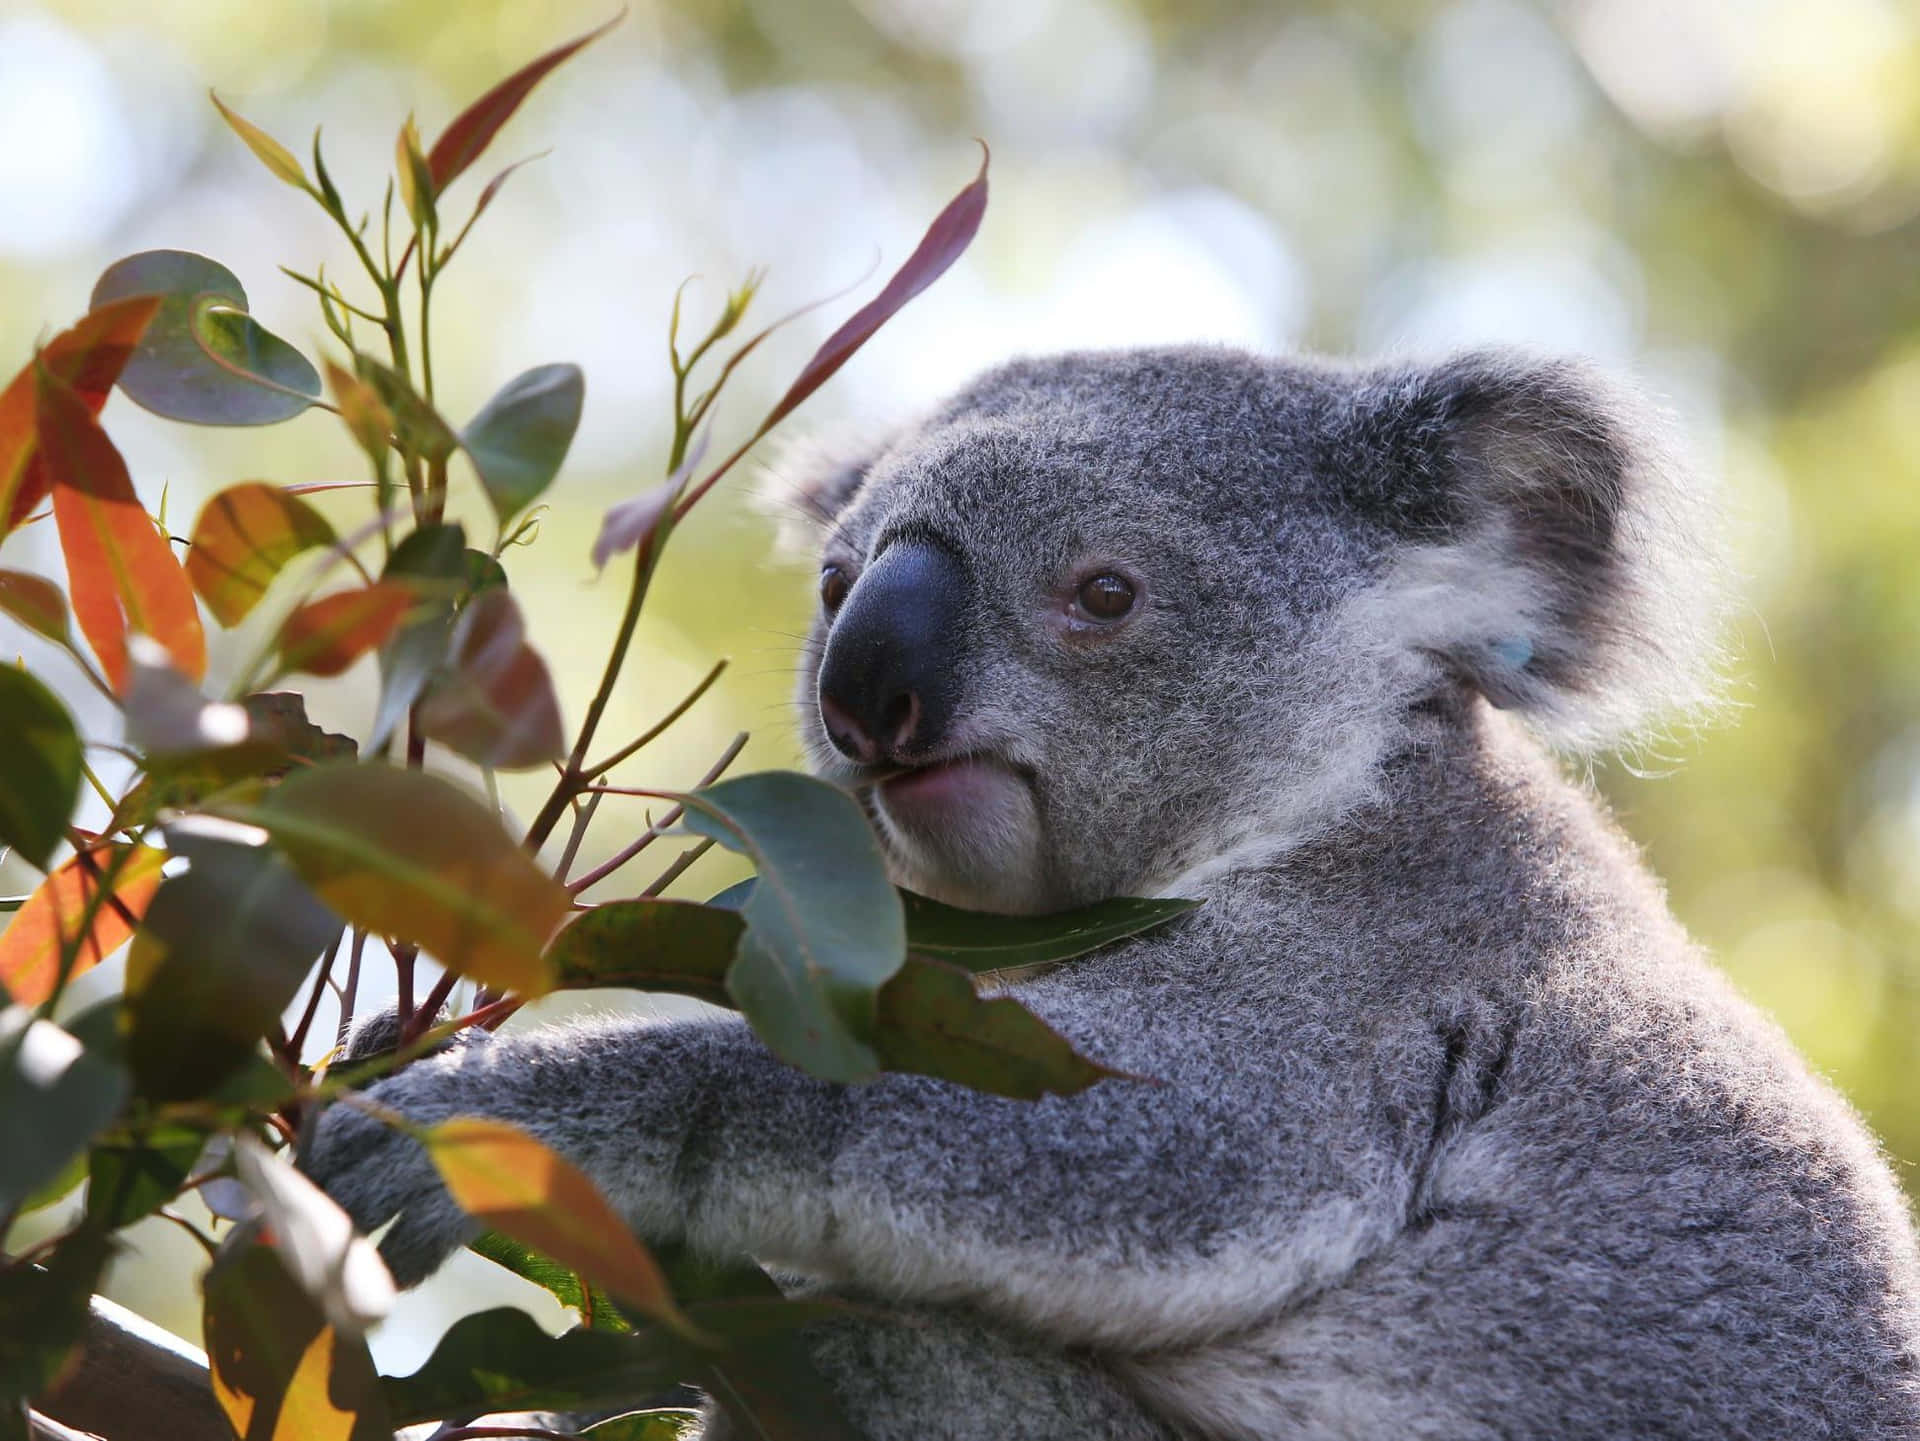 A lonely koala taking a winter nap